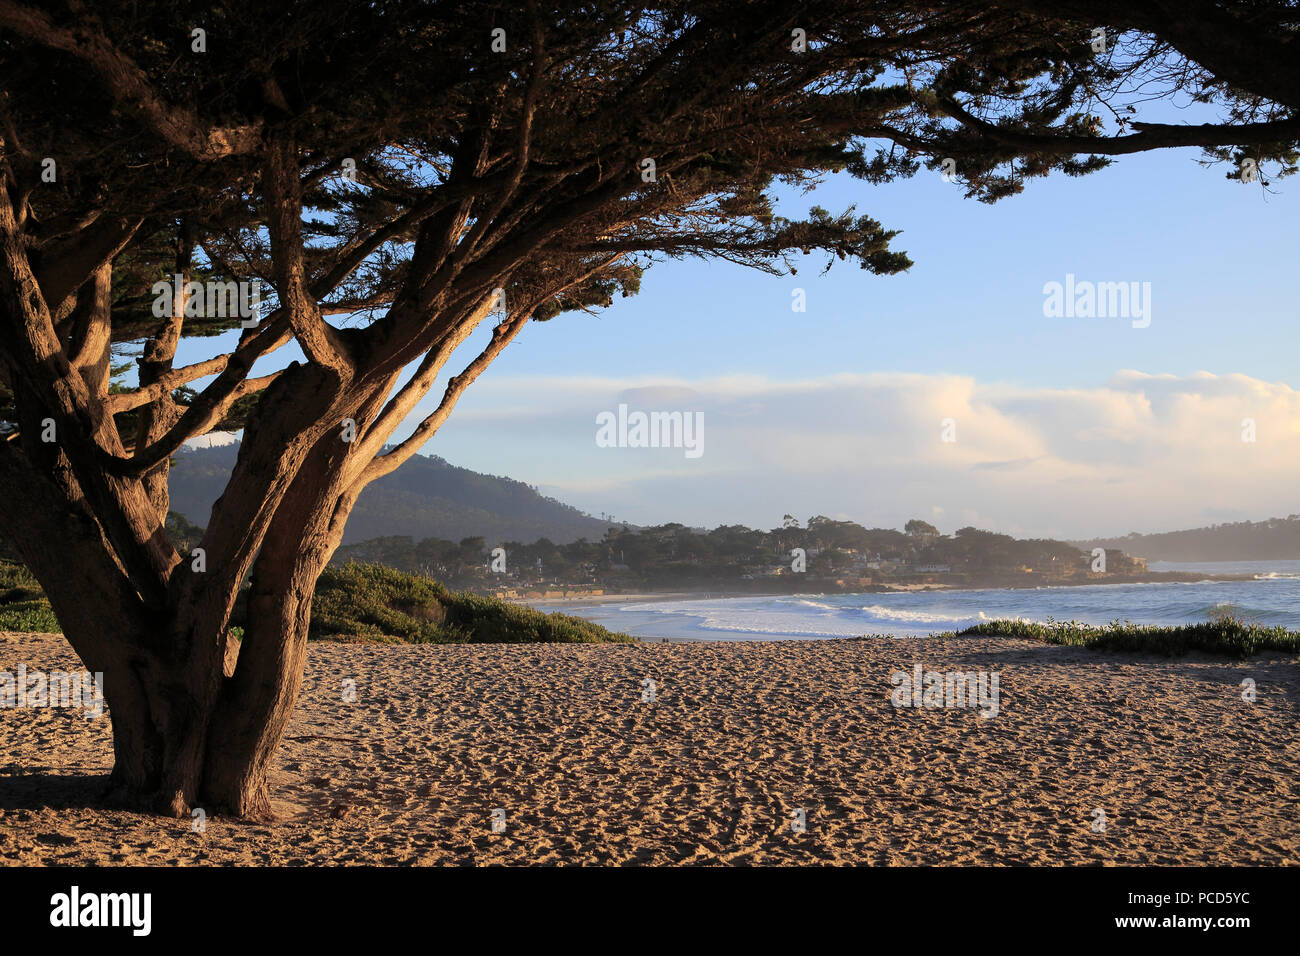 Beach, Carmel by the Sea, Monterey Cypress (Cupressus Macrocarpa) tree, Monterey Peninsula, Pacific Ocean, California, USA, North America Stock Photo